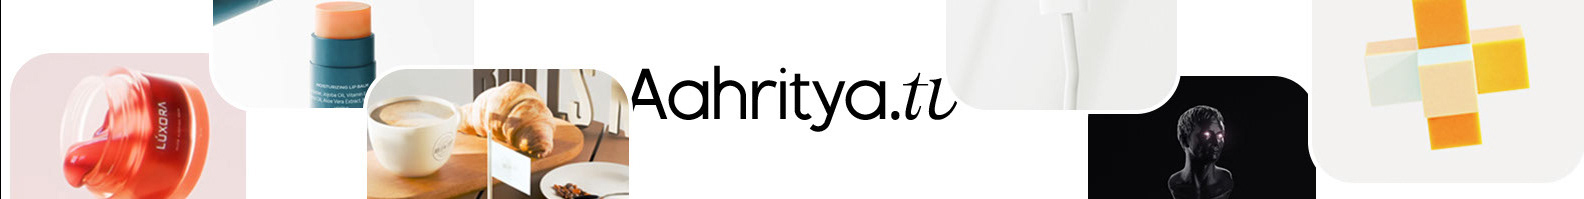 Aahritya.tv ‎'s profile banner